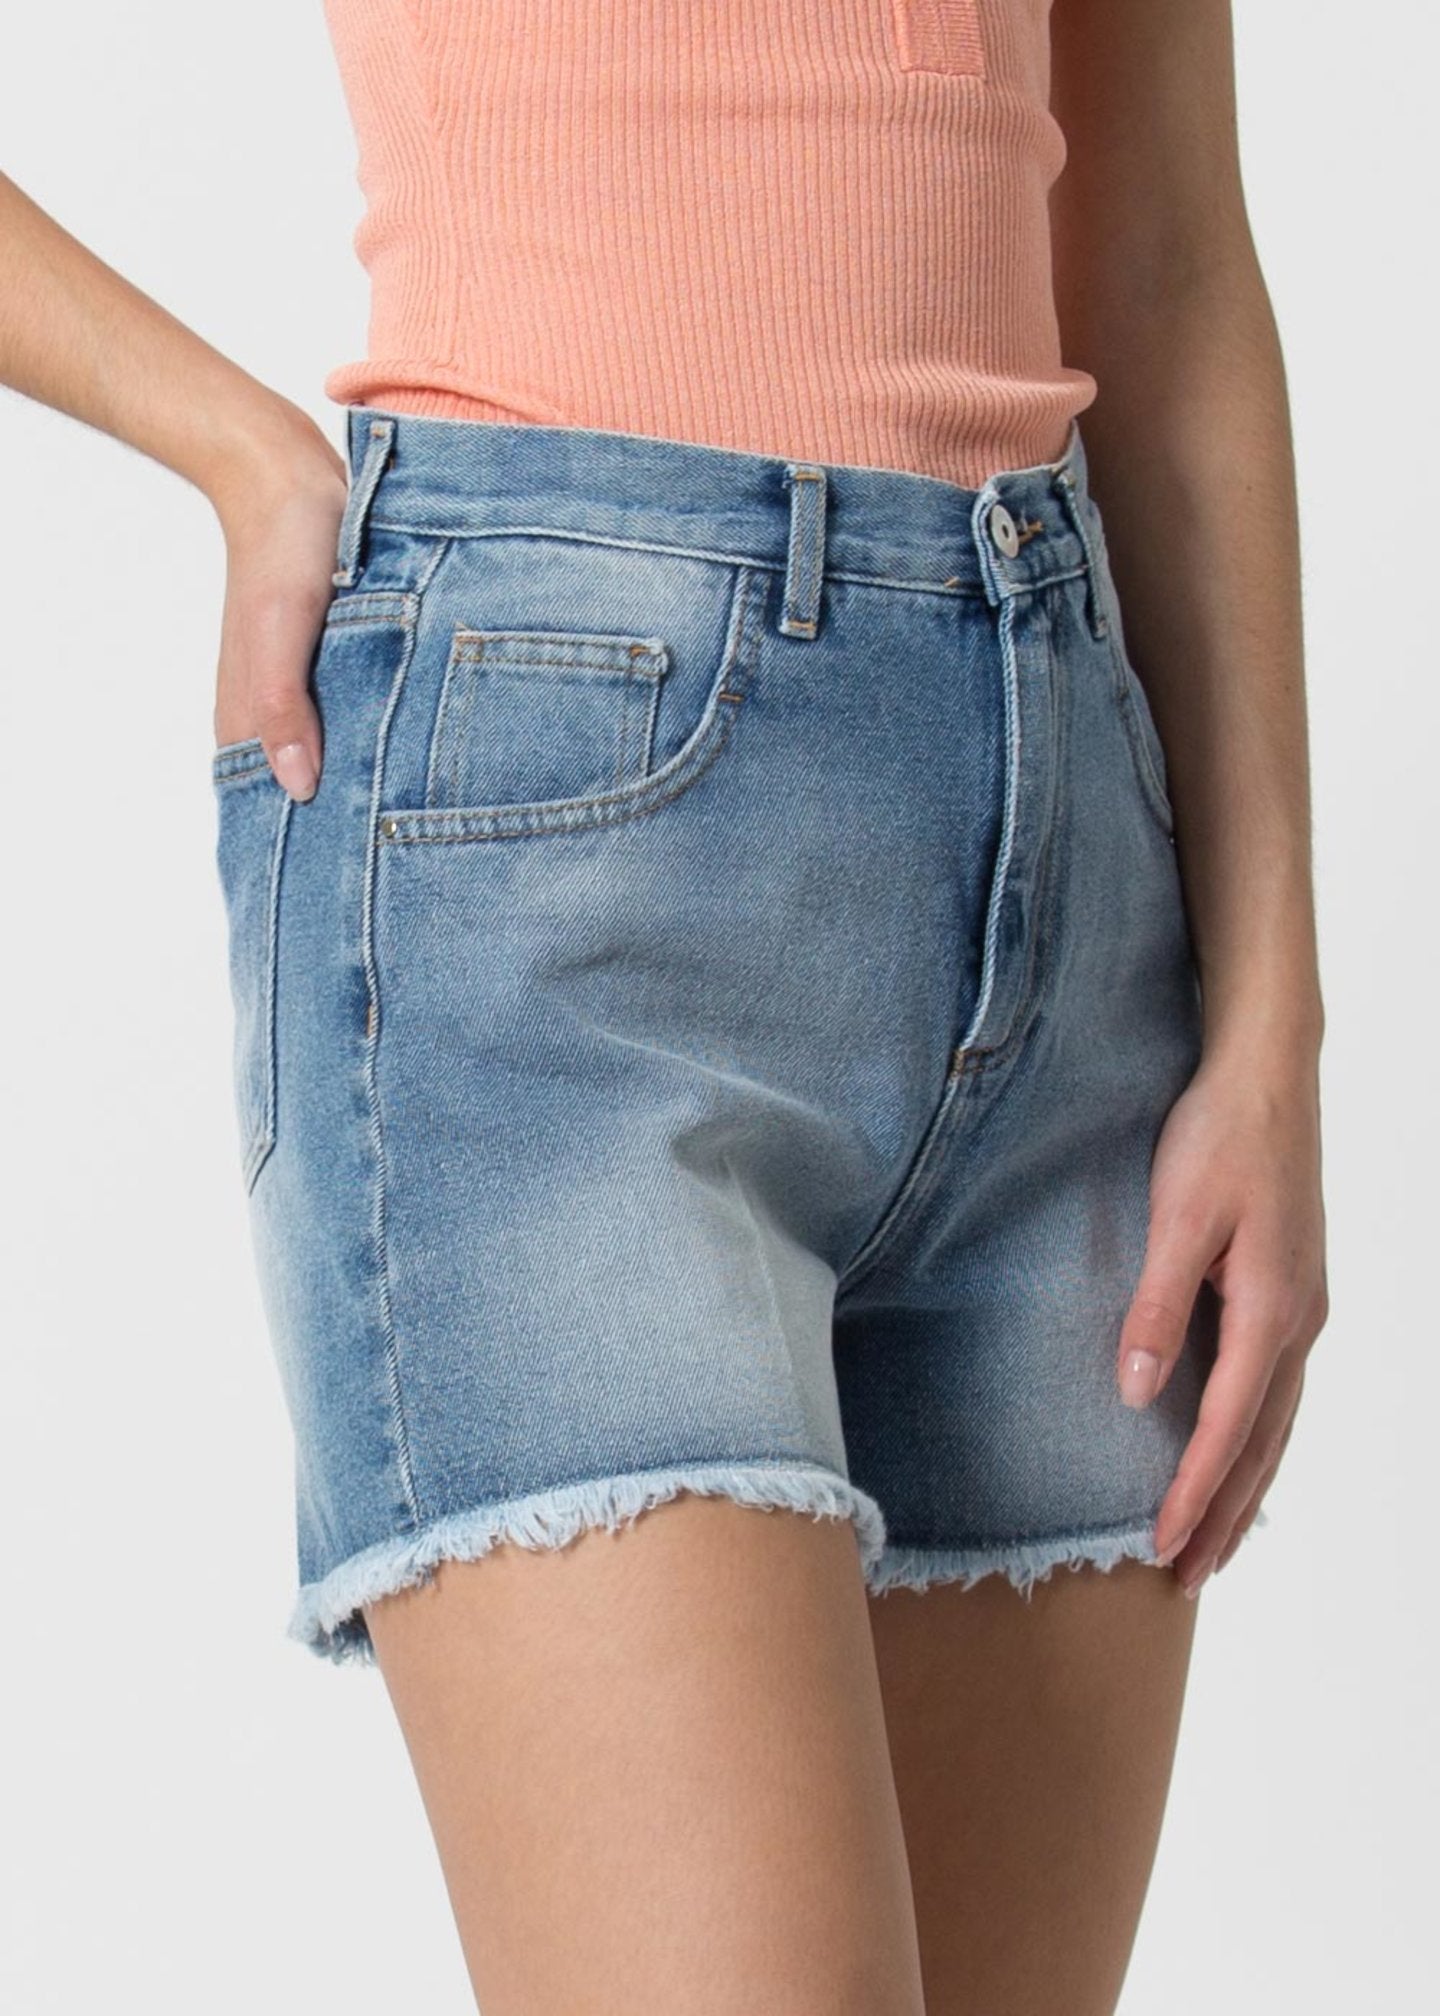 Shorts Kocca in Denim / Jeans - Ideal Moda